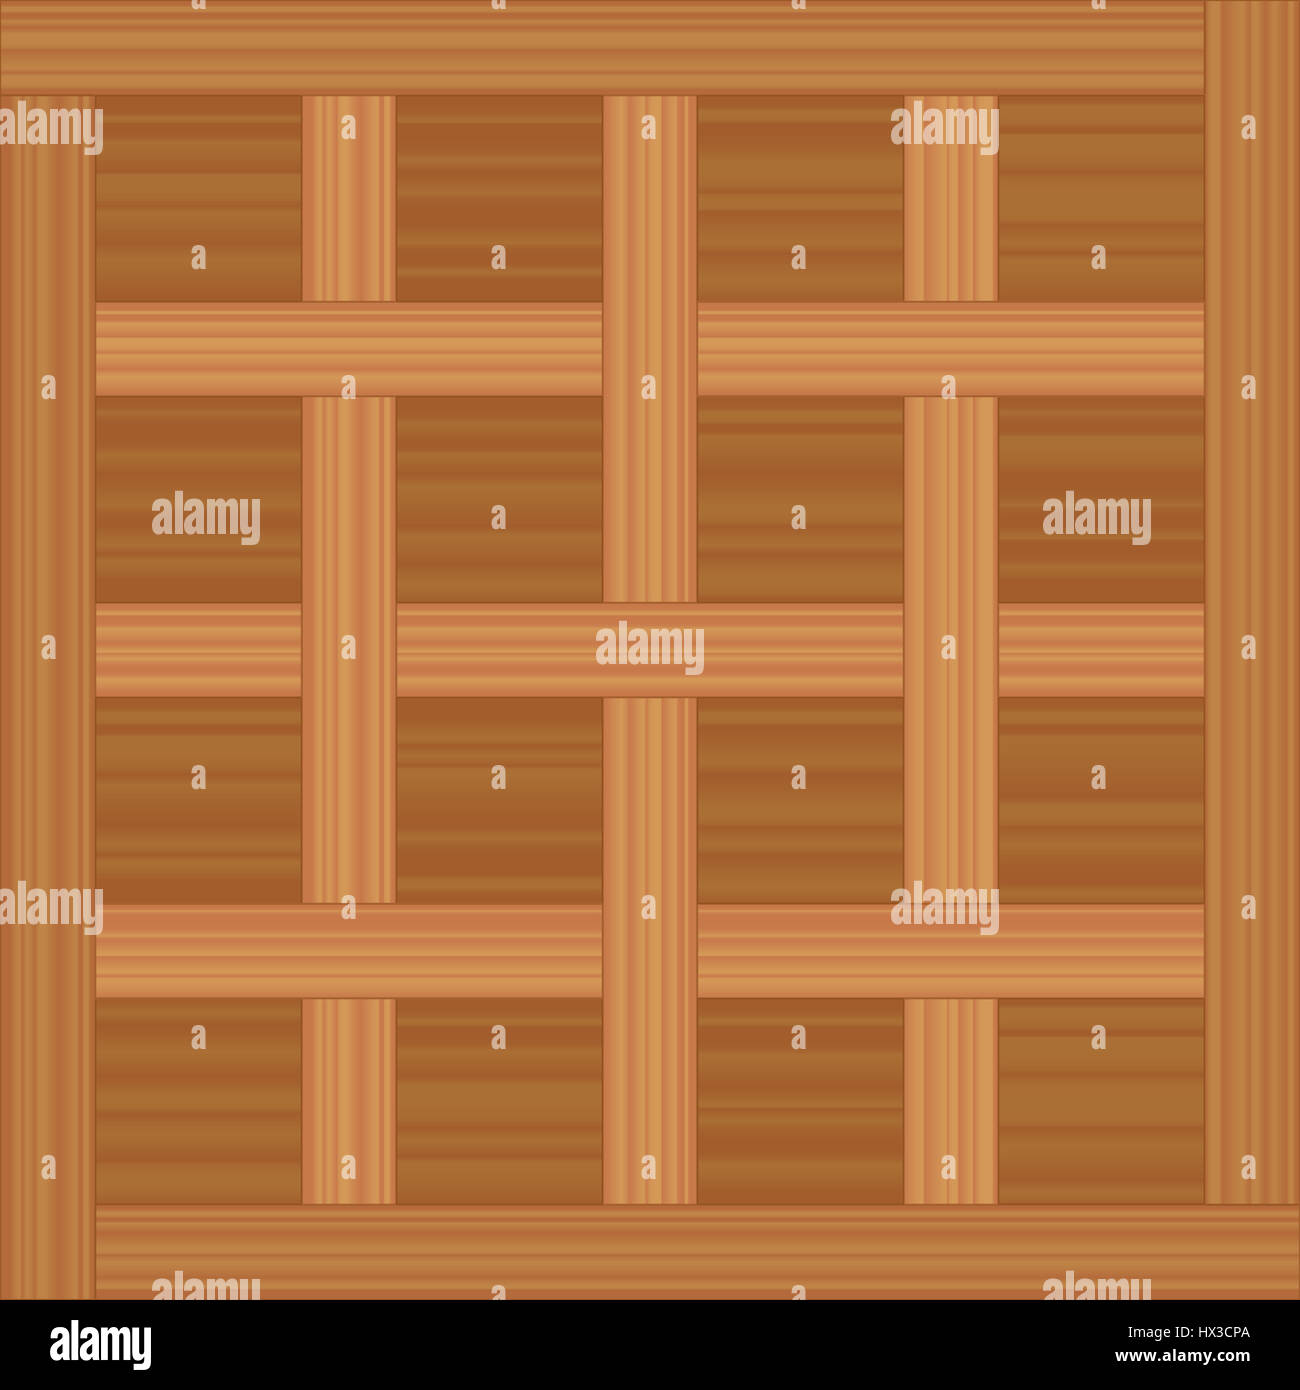 Flooring pattern named CHANTILLY PARQUET - illustration of an antique wooden flooring pattern. Stock Photo